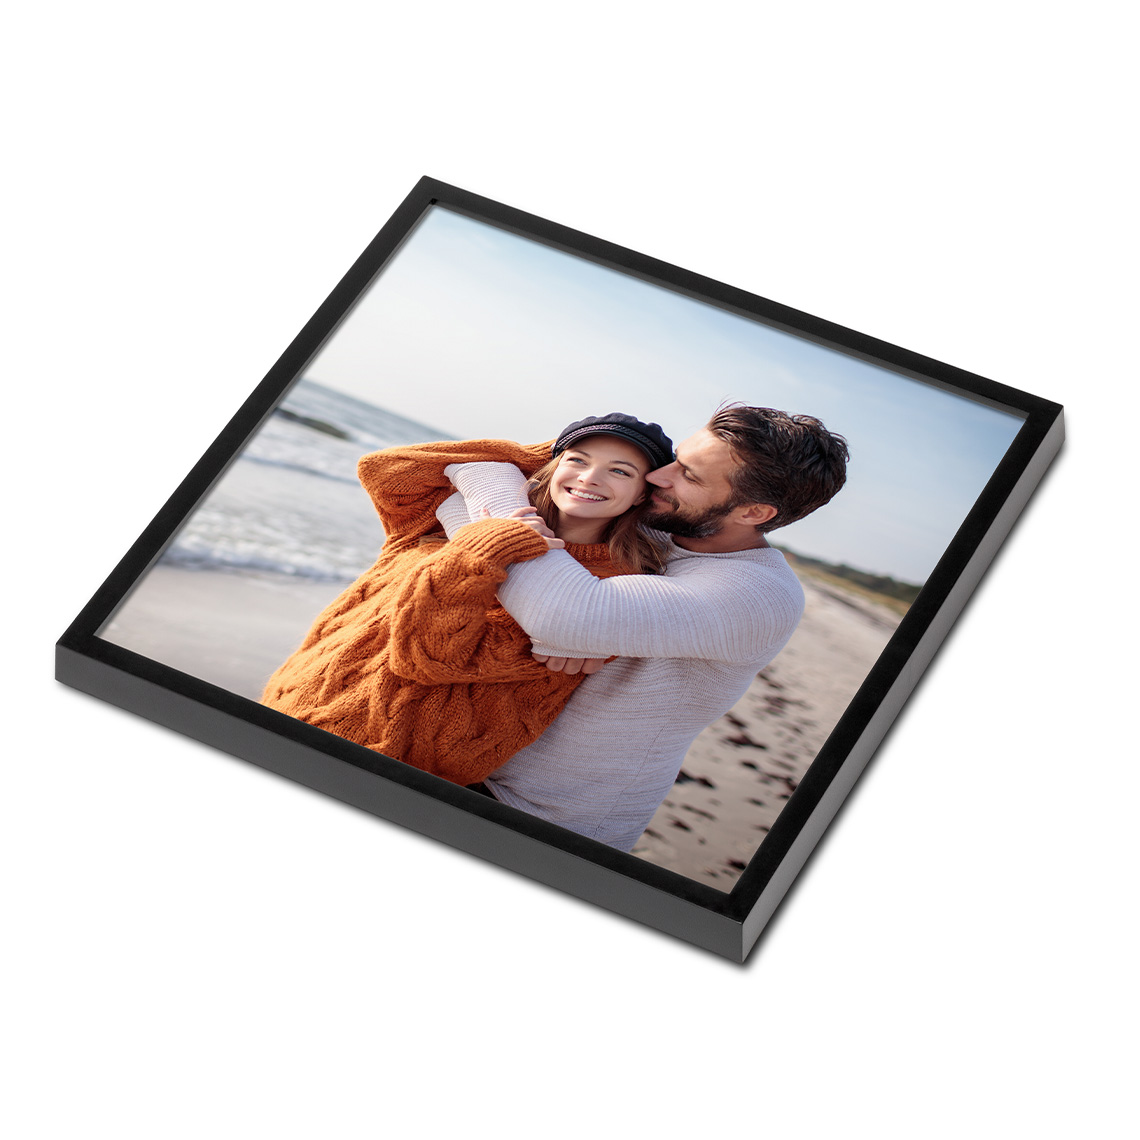 Browse Framed Photo Tile Designs | Framed Photo Tiles | Custom Home ...